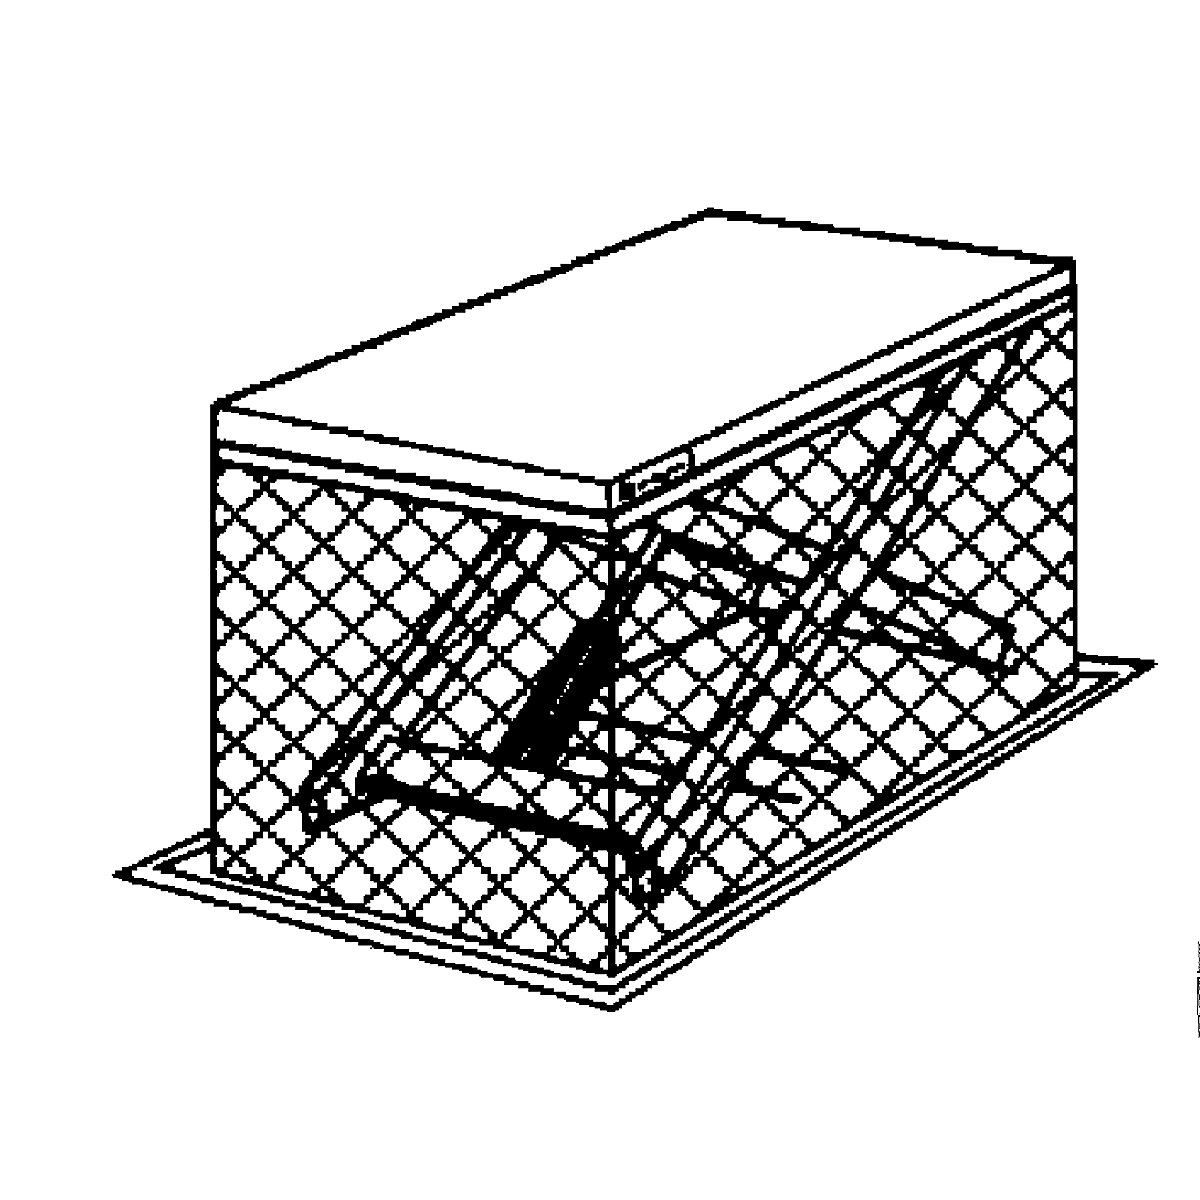 Compact lift table – Edmolift (Product illustration 16)-15